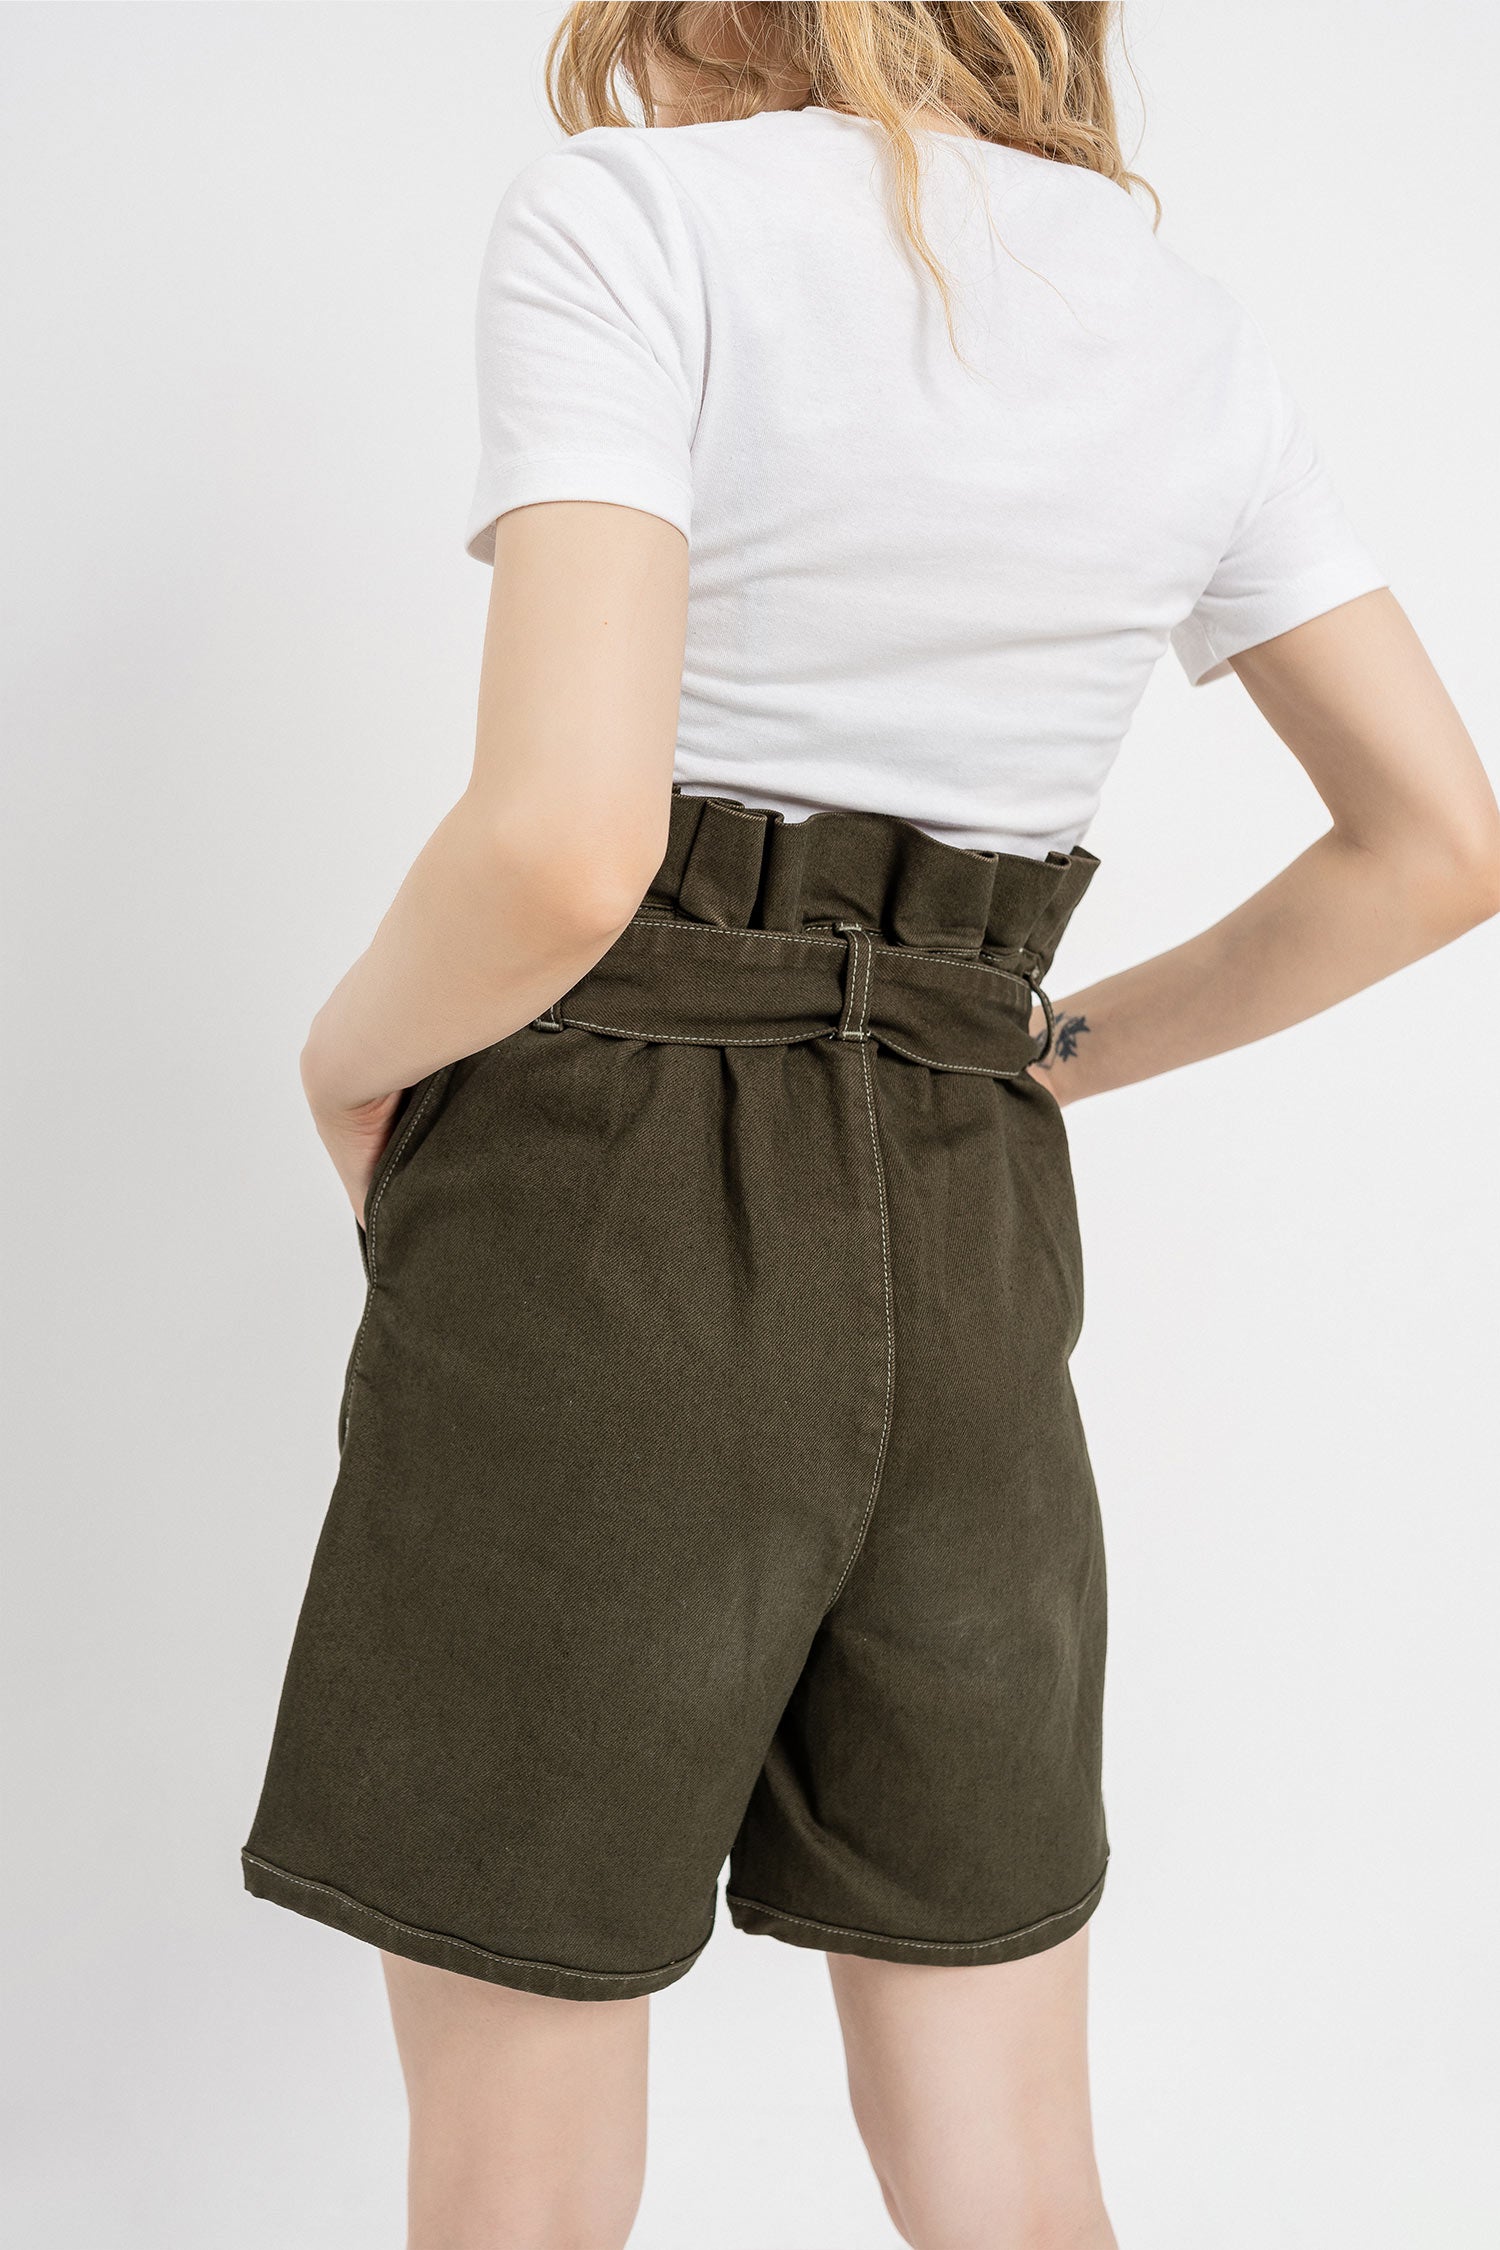 Military Crop Shorts